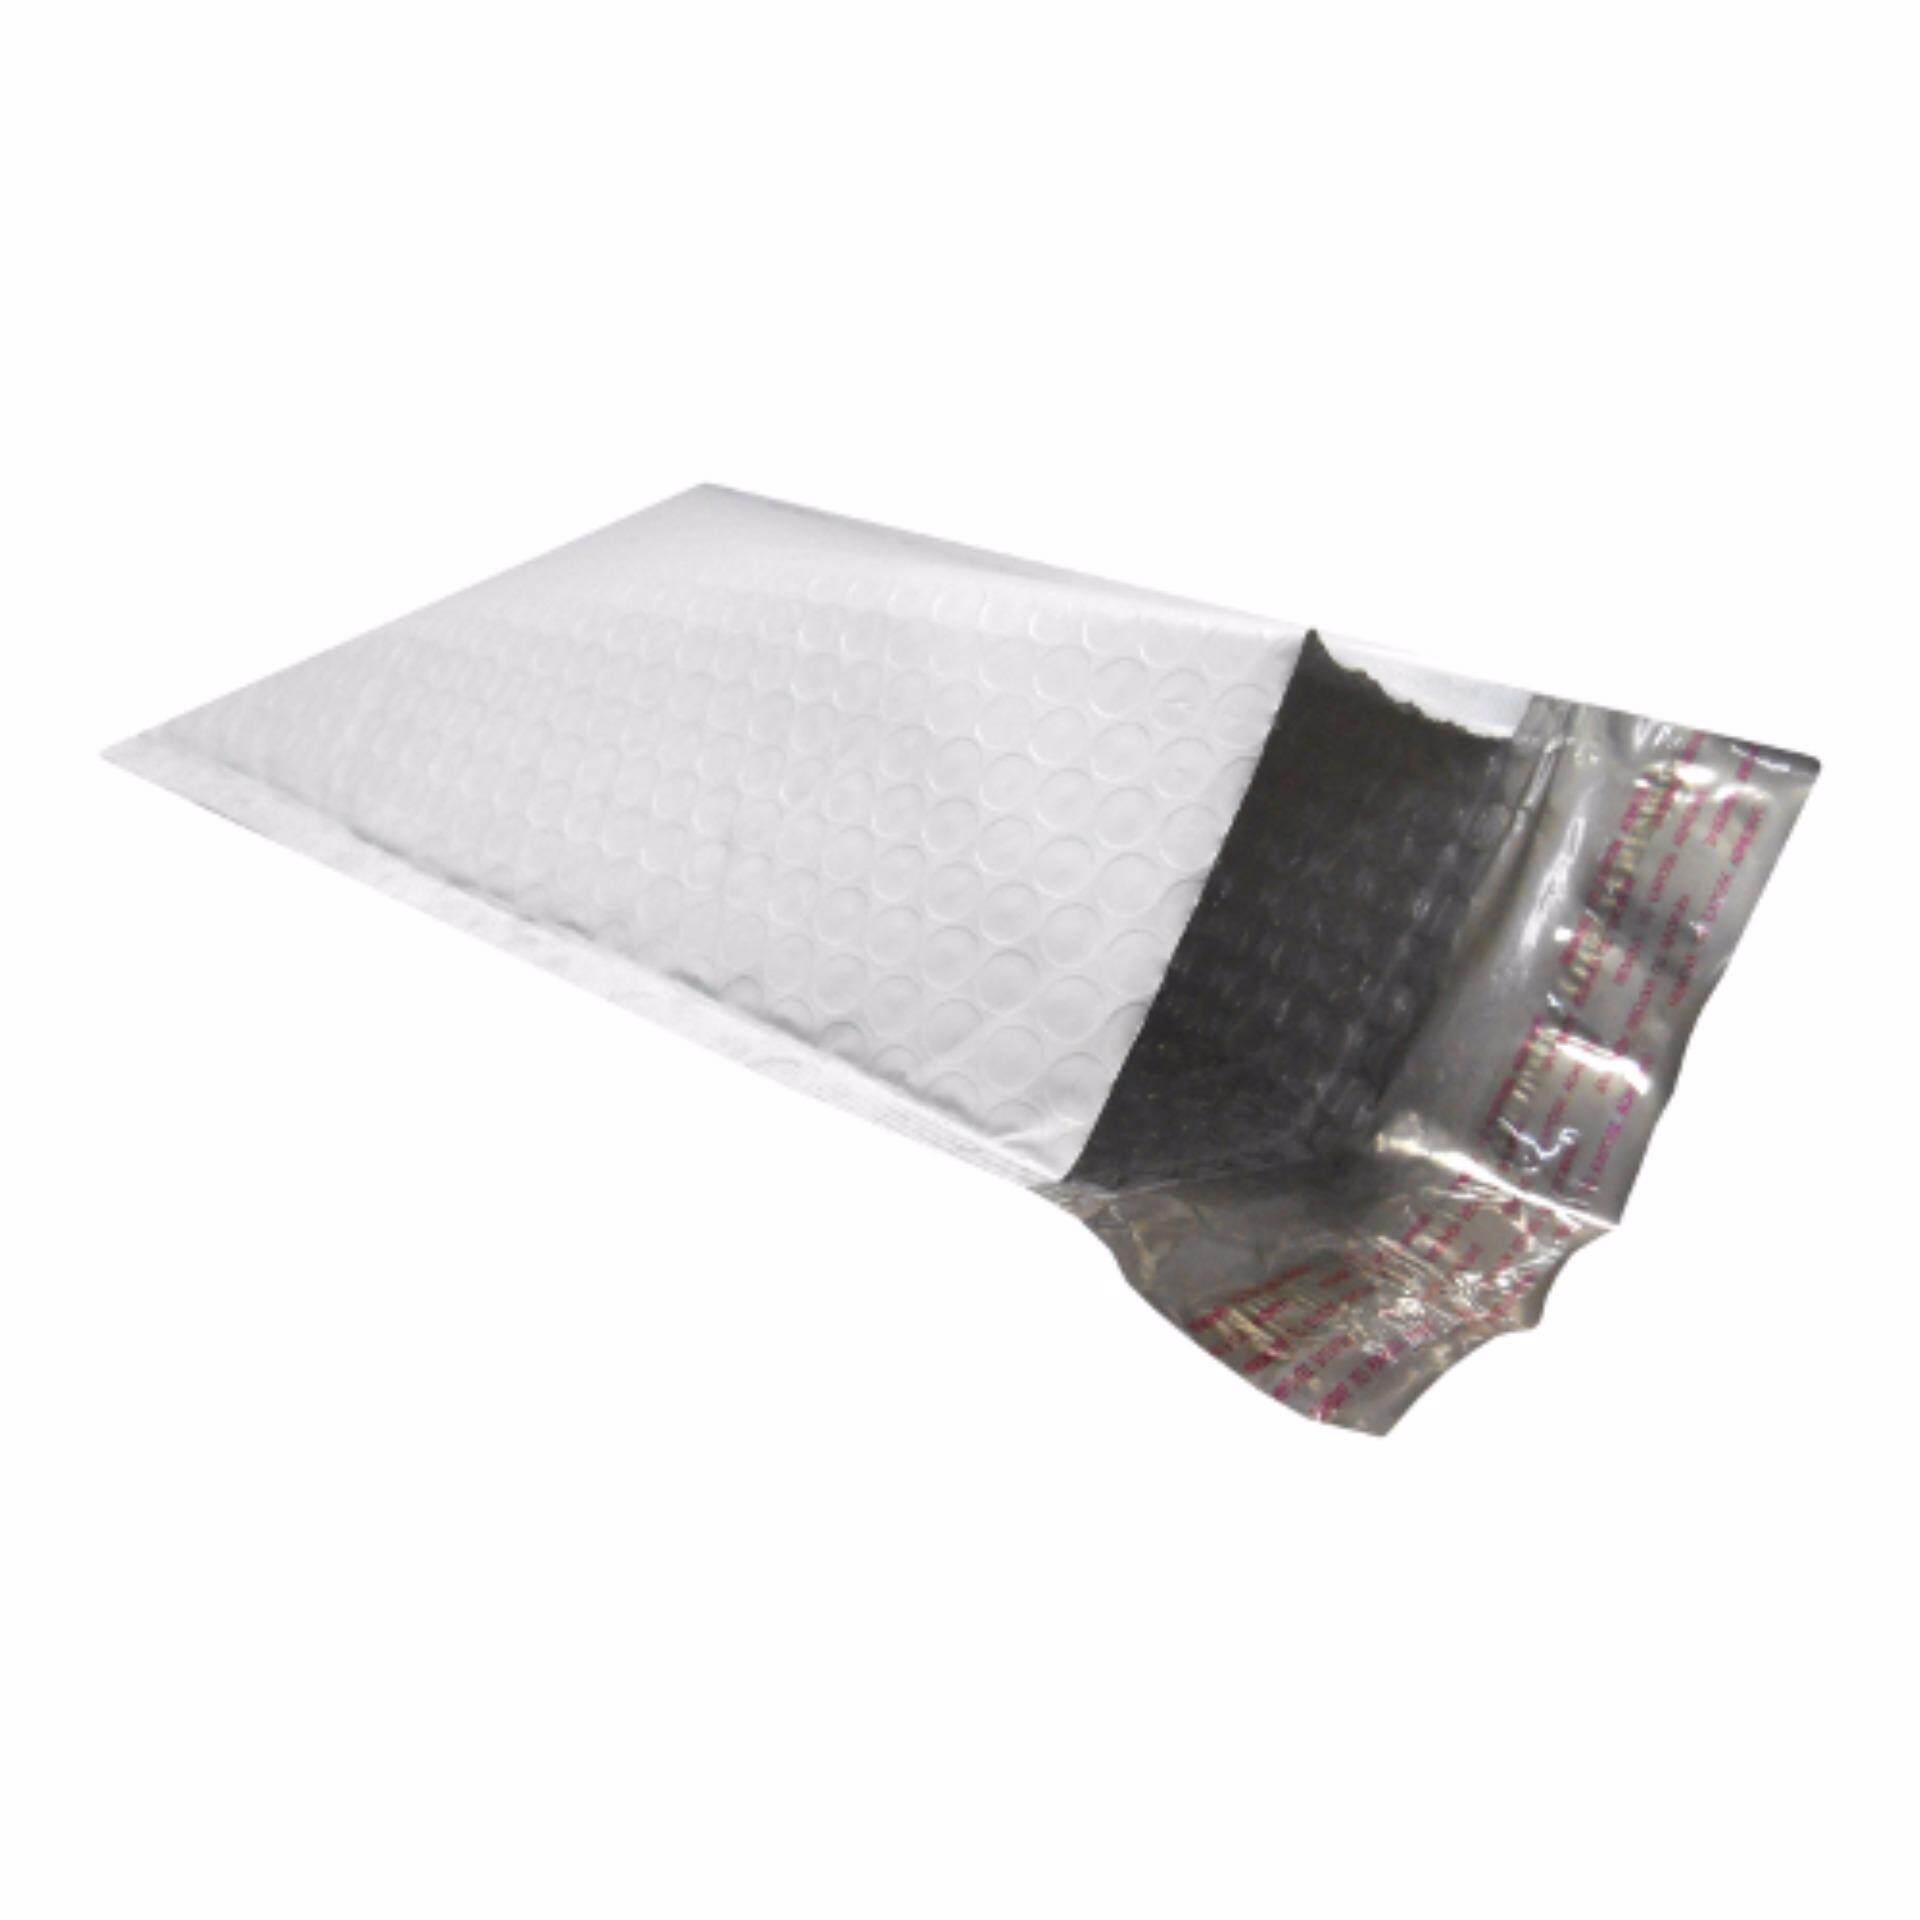 10pcs x Fullmark Polymailer Envelope with Bubble Wrap/ Padded Envelope (18*28.5cm)